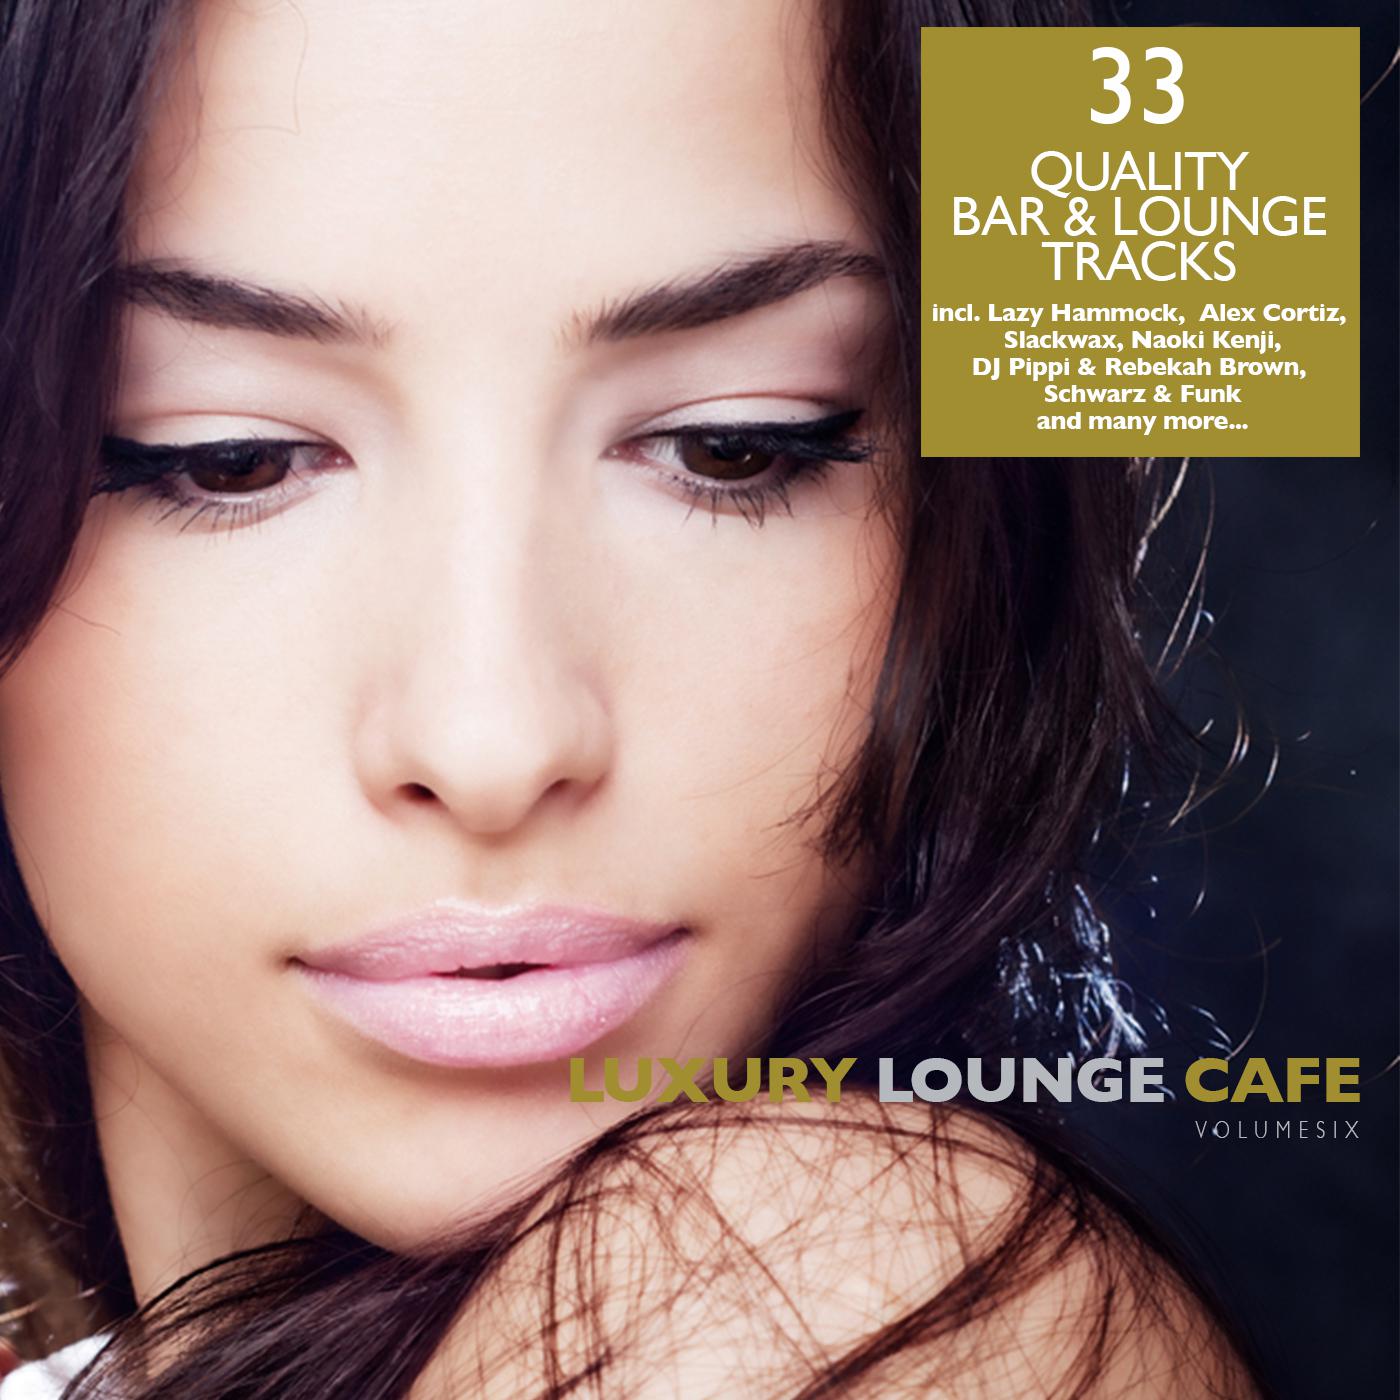 Luxury Lounge Cafe, Vol. 6 - 33 Quality Bar & Lounge Tracks